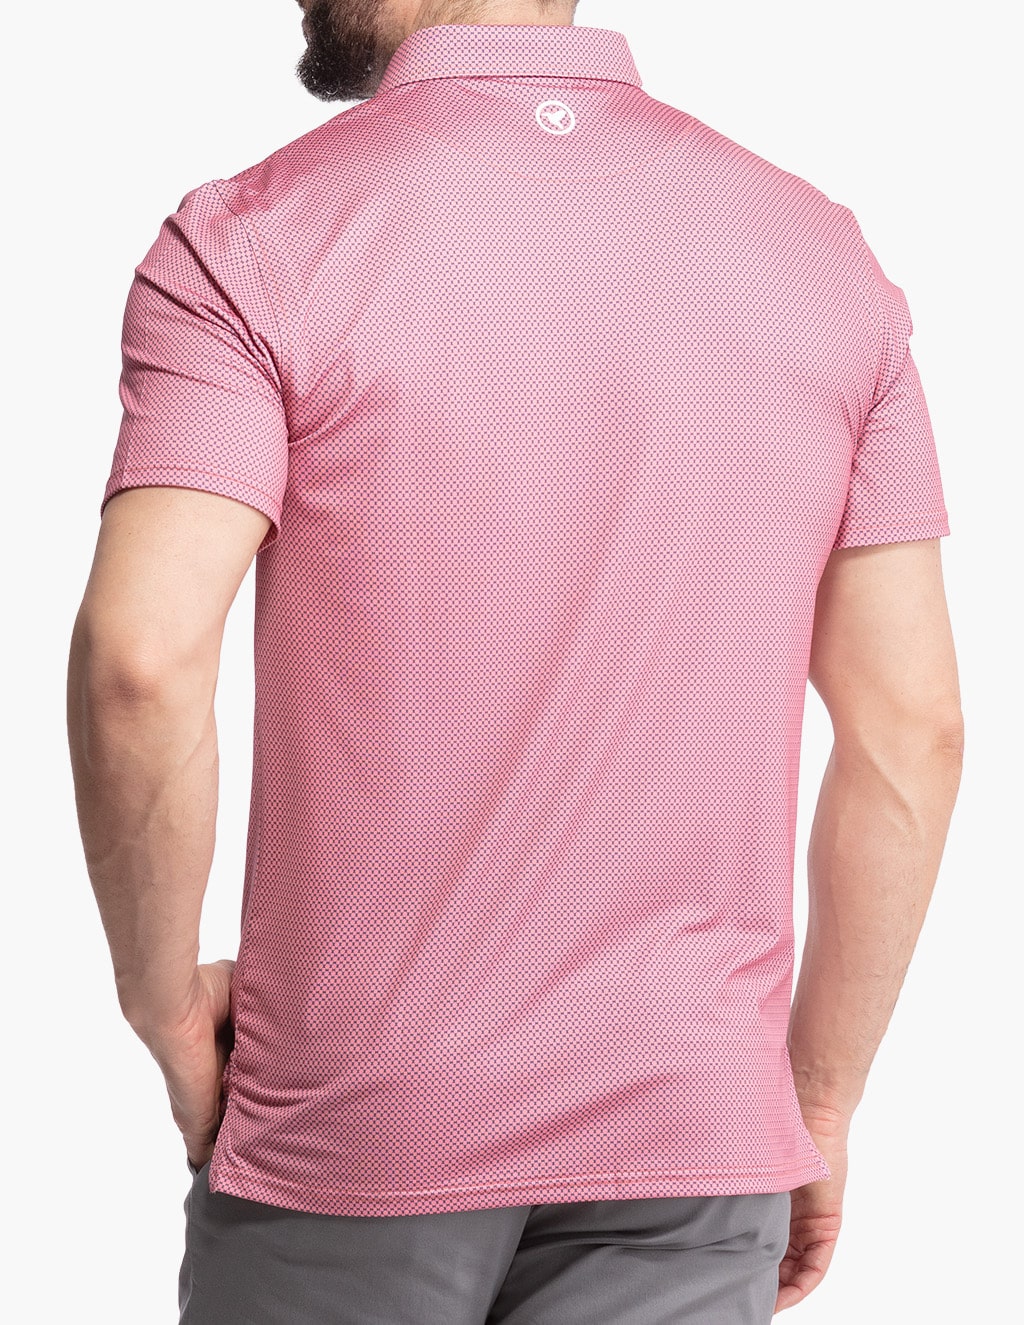 Kayser Women's Alive T-Shirt Bra - Pink Yarrow